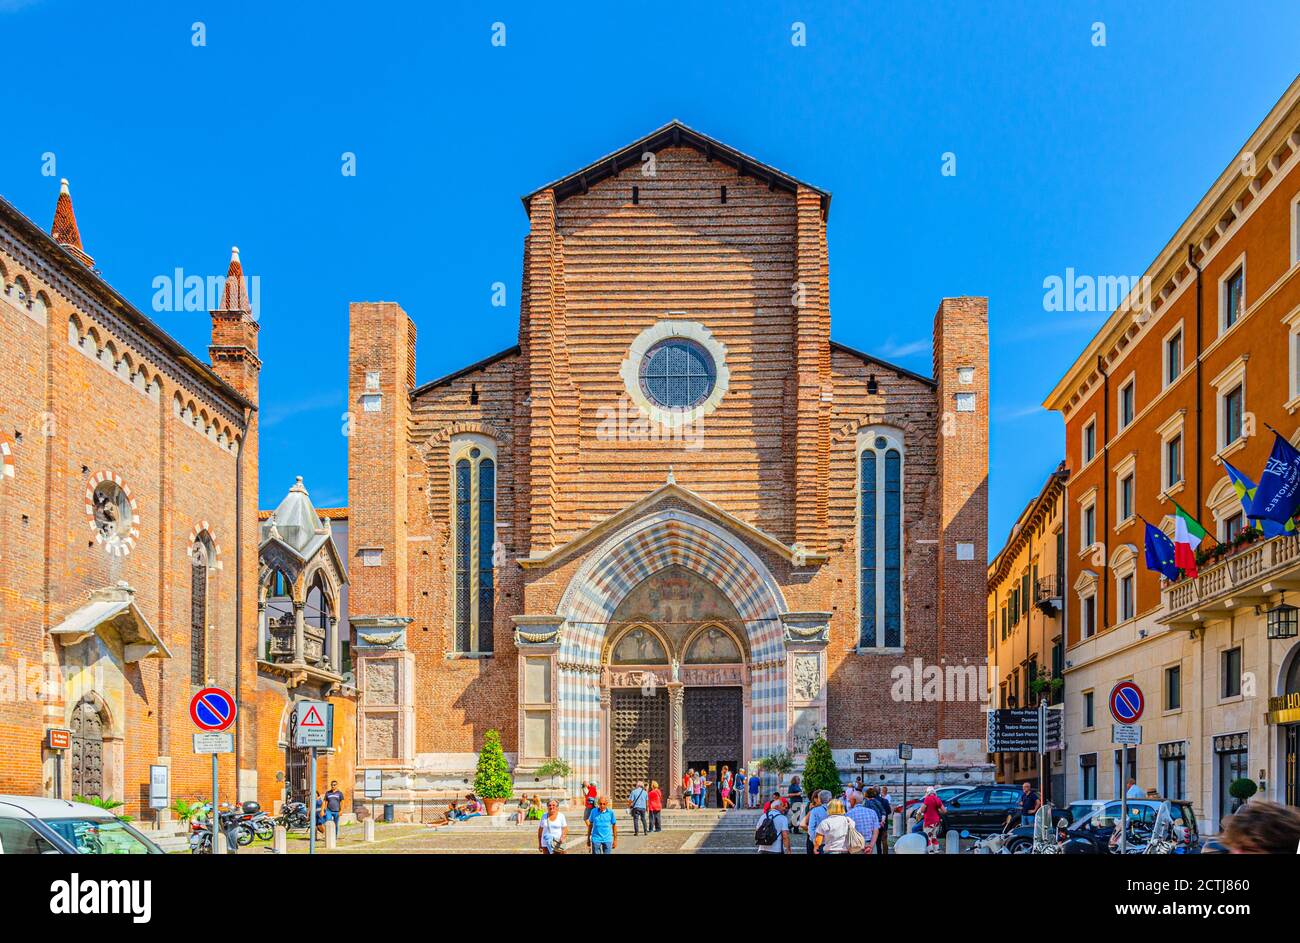 Verona, Italy, September 12, 2019: Basilica di Santa Anastasia catholic church of Dominican Order in Piazza Santa Anastasia square, Gothic style building in historical city centre Citta Antica Stock Photo